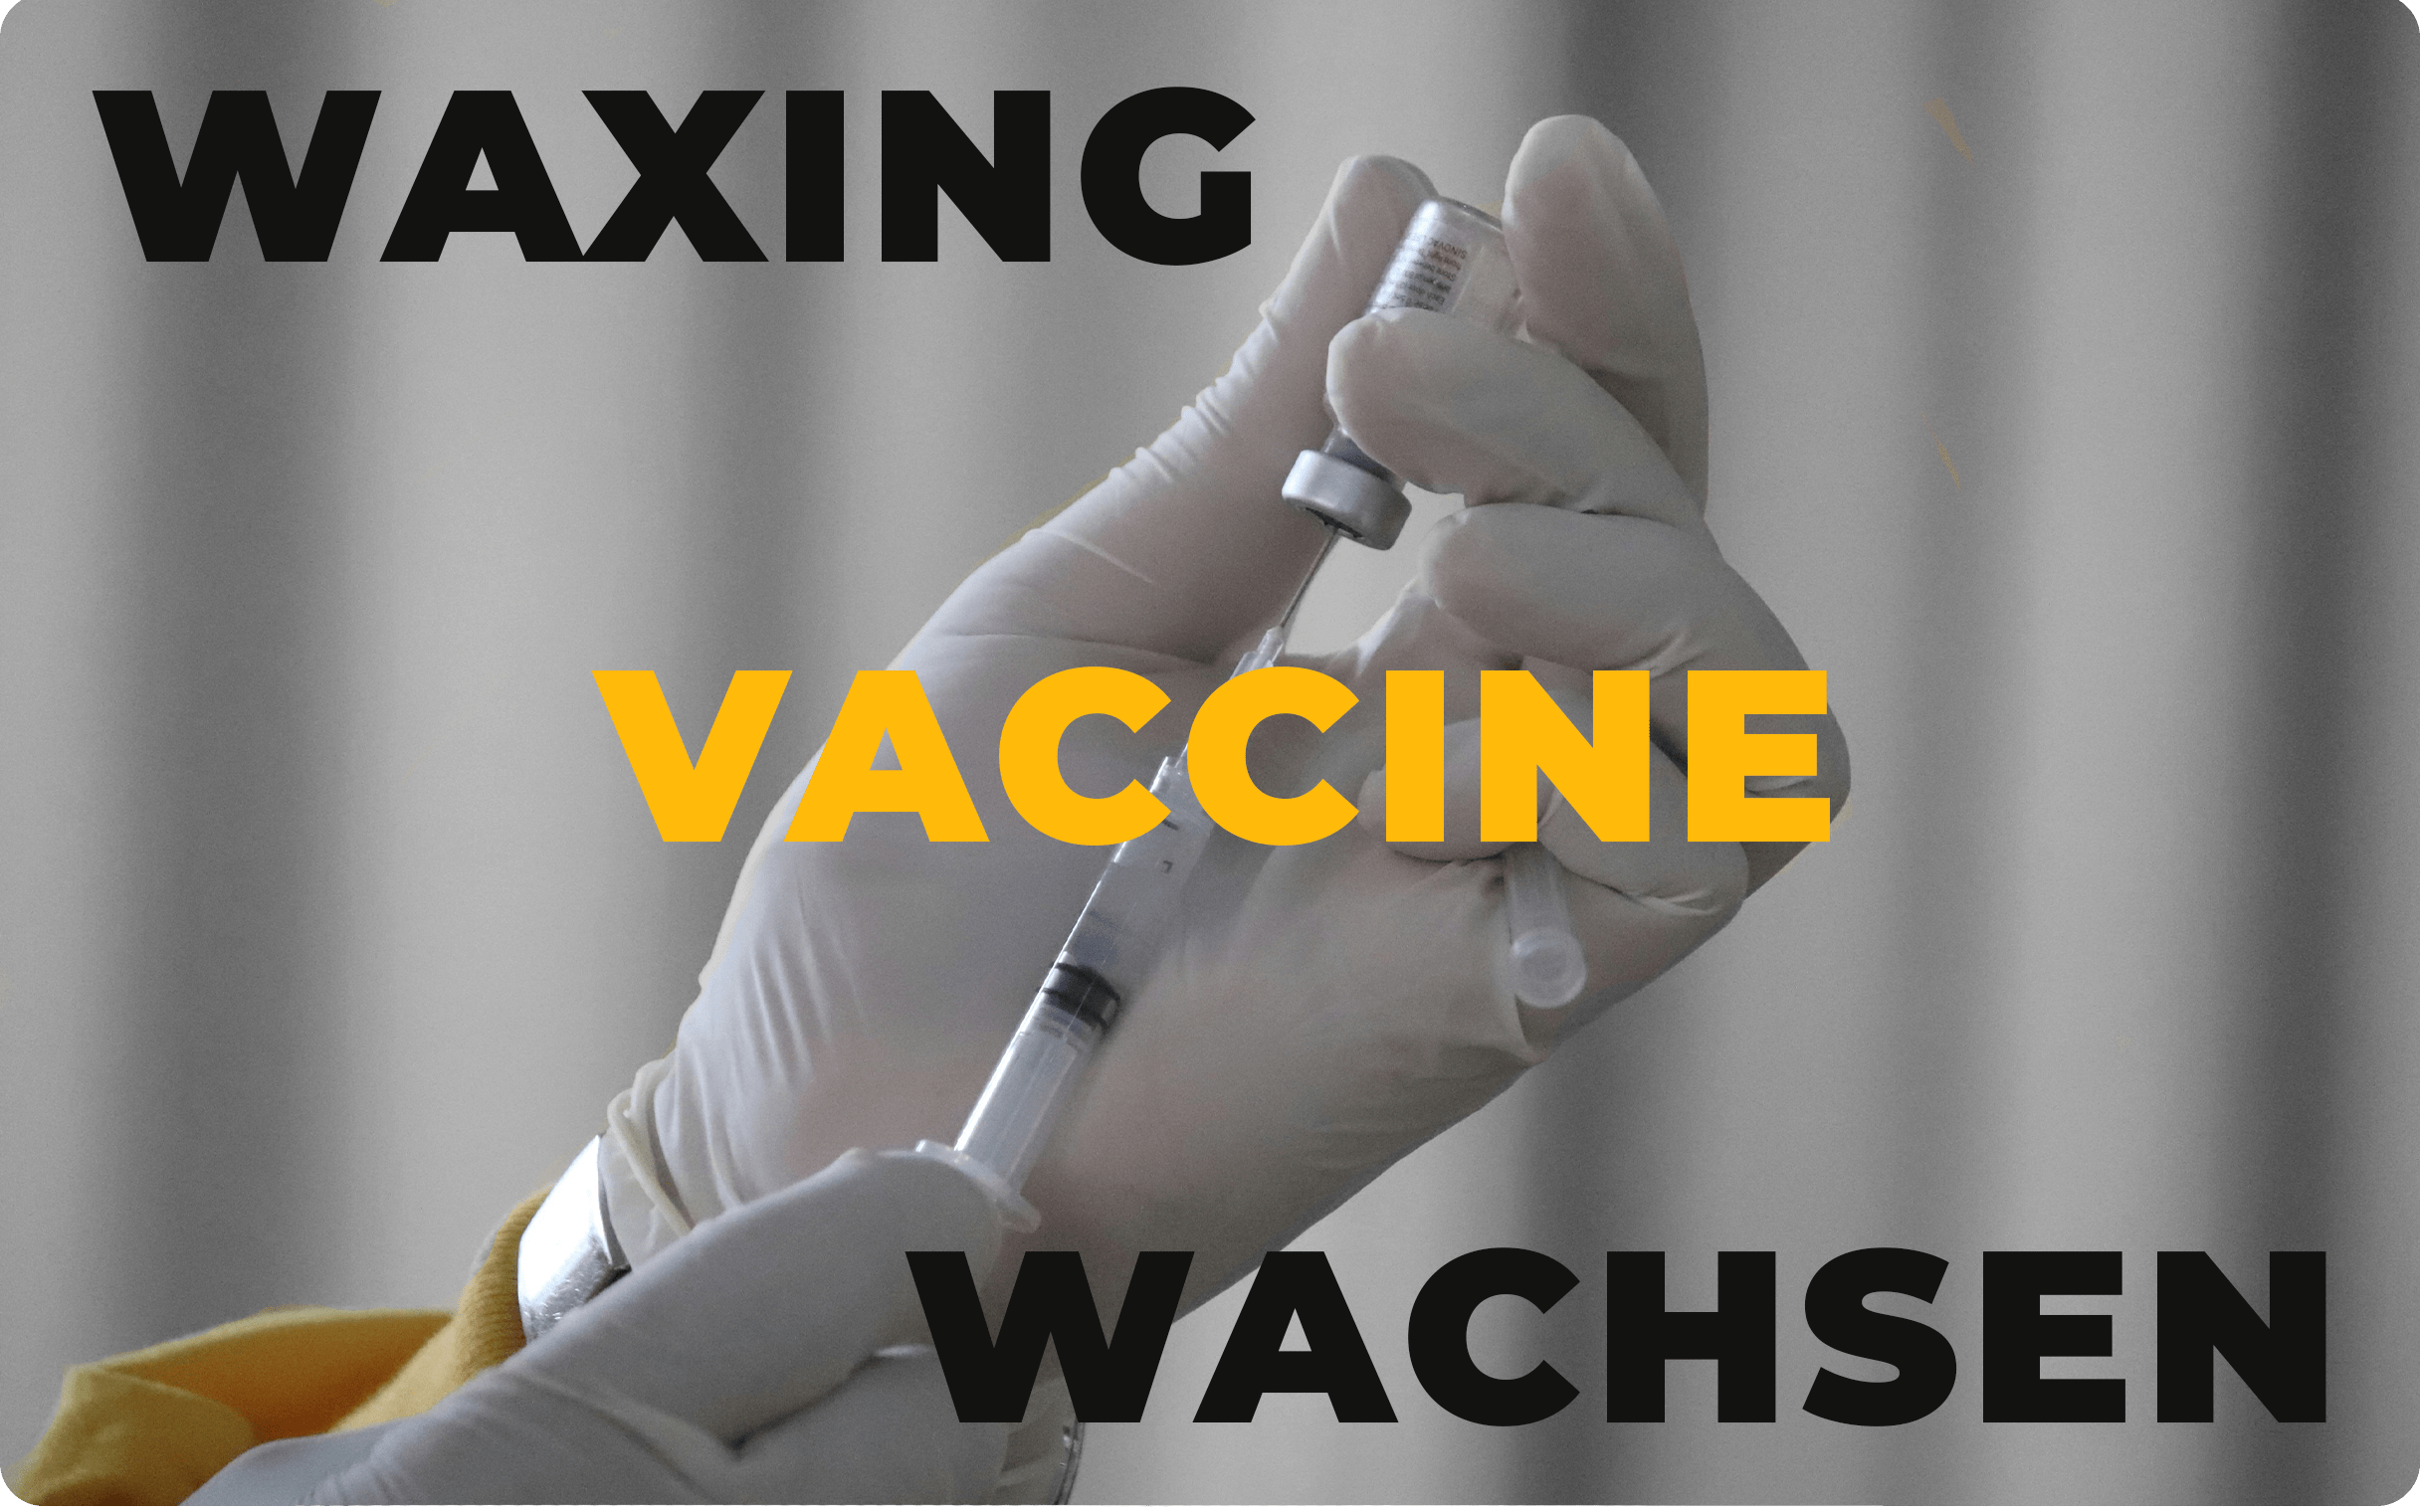 Vaccine, waxing, and wachsen